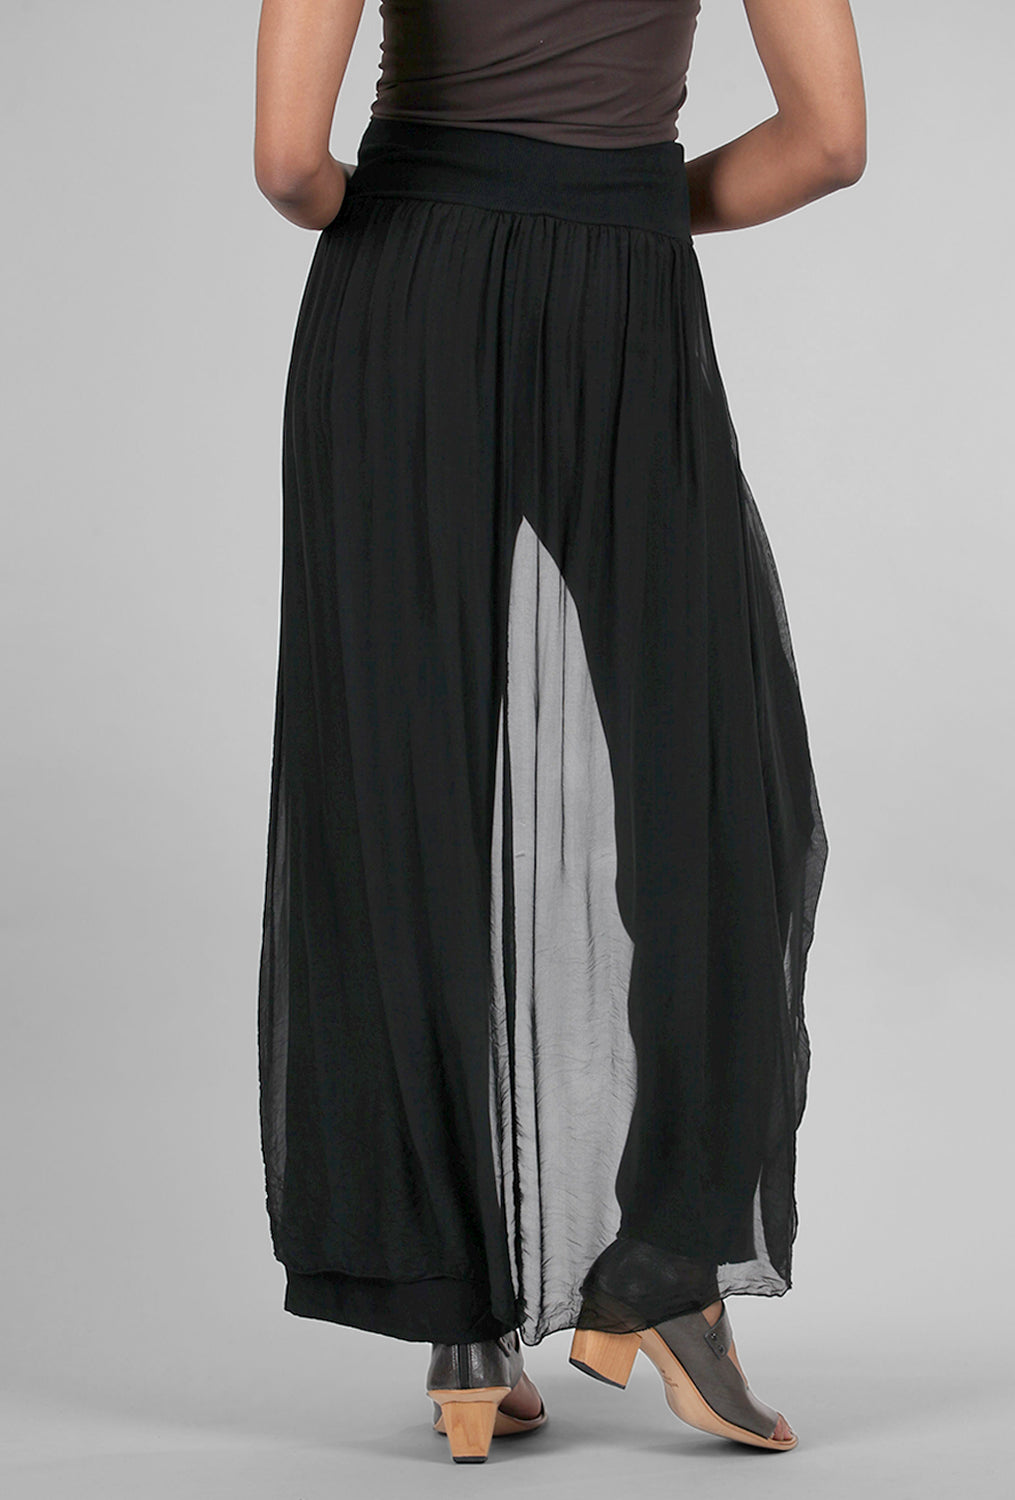 Pants & Jumpsuits | Black Pants With Skirt Overlay | Poshmark